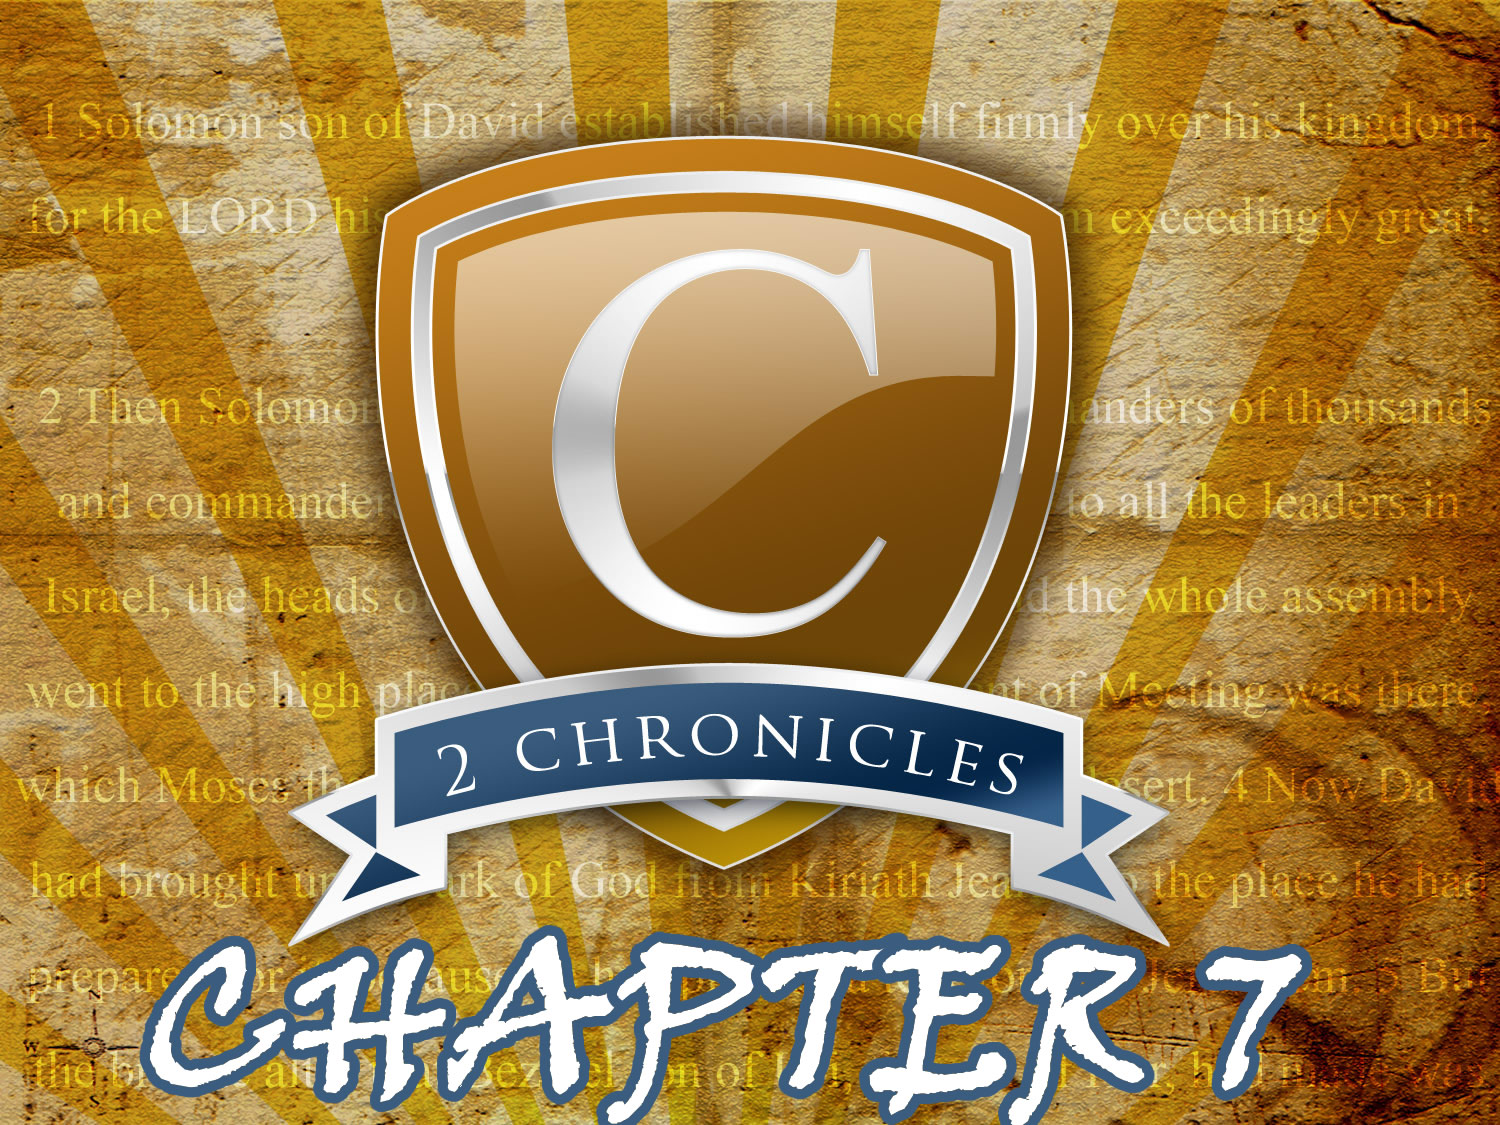 2 Chronicles 7